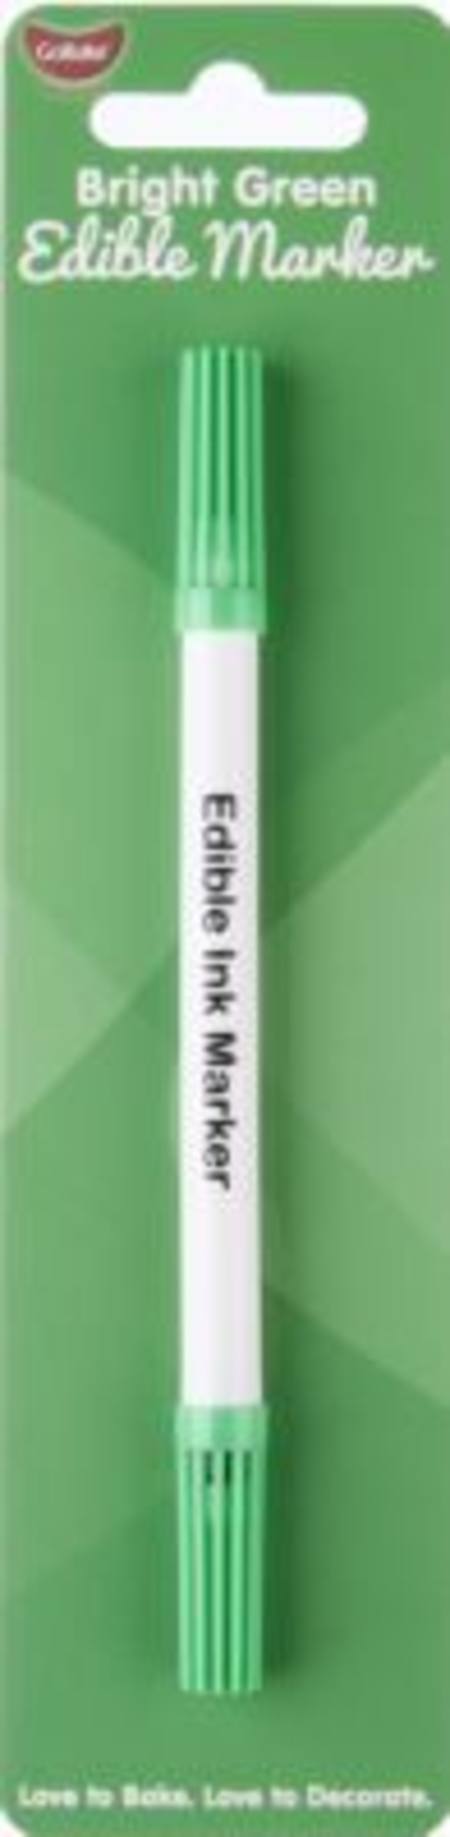 Edible Marker Pen Bright Green